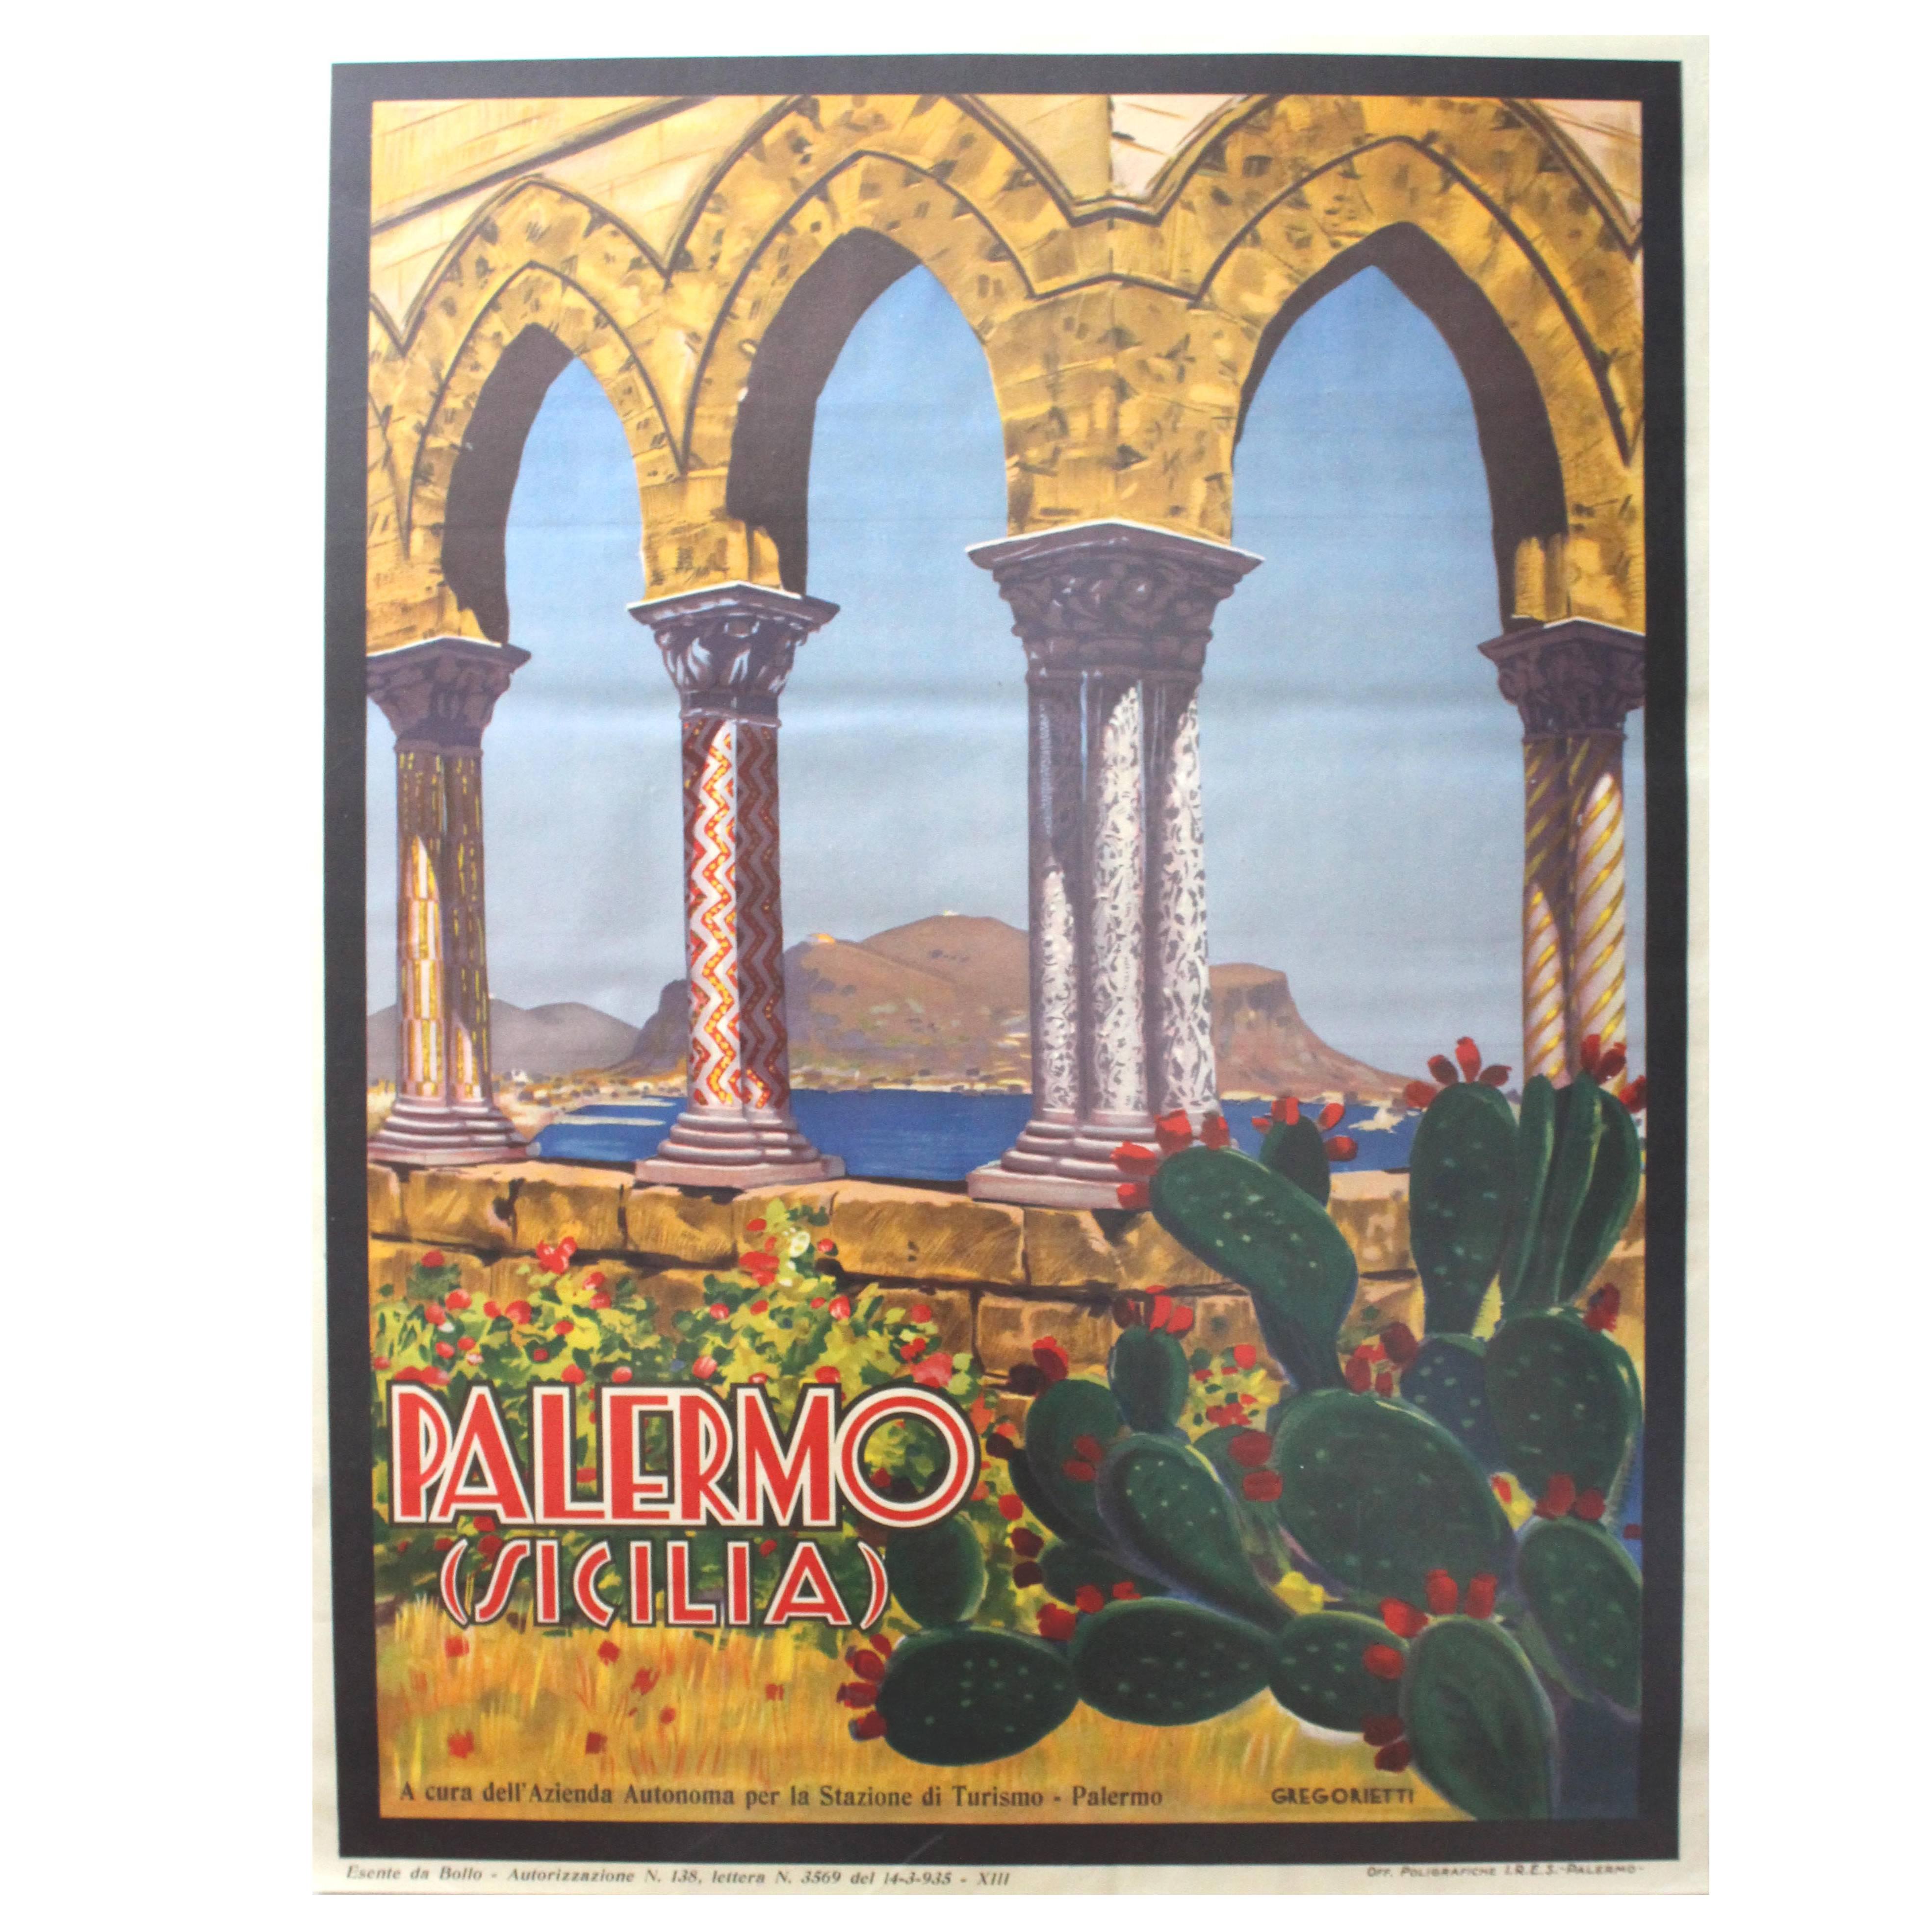 Original 1935 ENIT Travel Advertising Poster for Palermo Sicily 'Sicilia', Italy